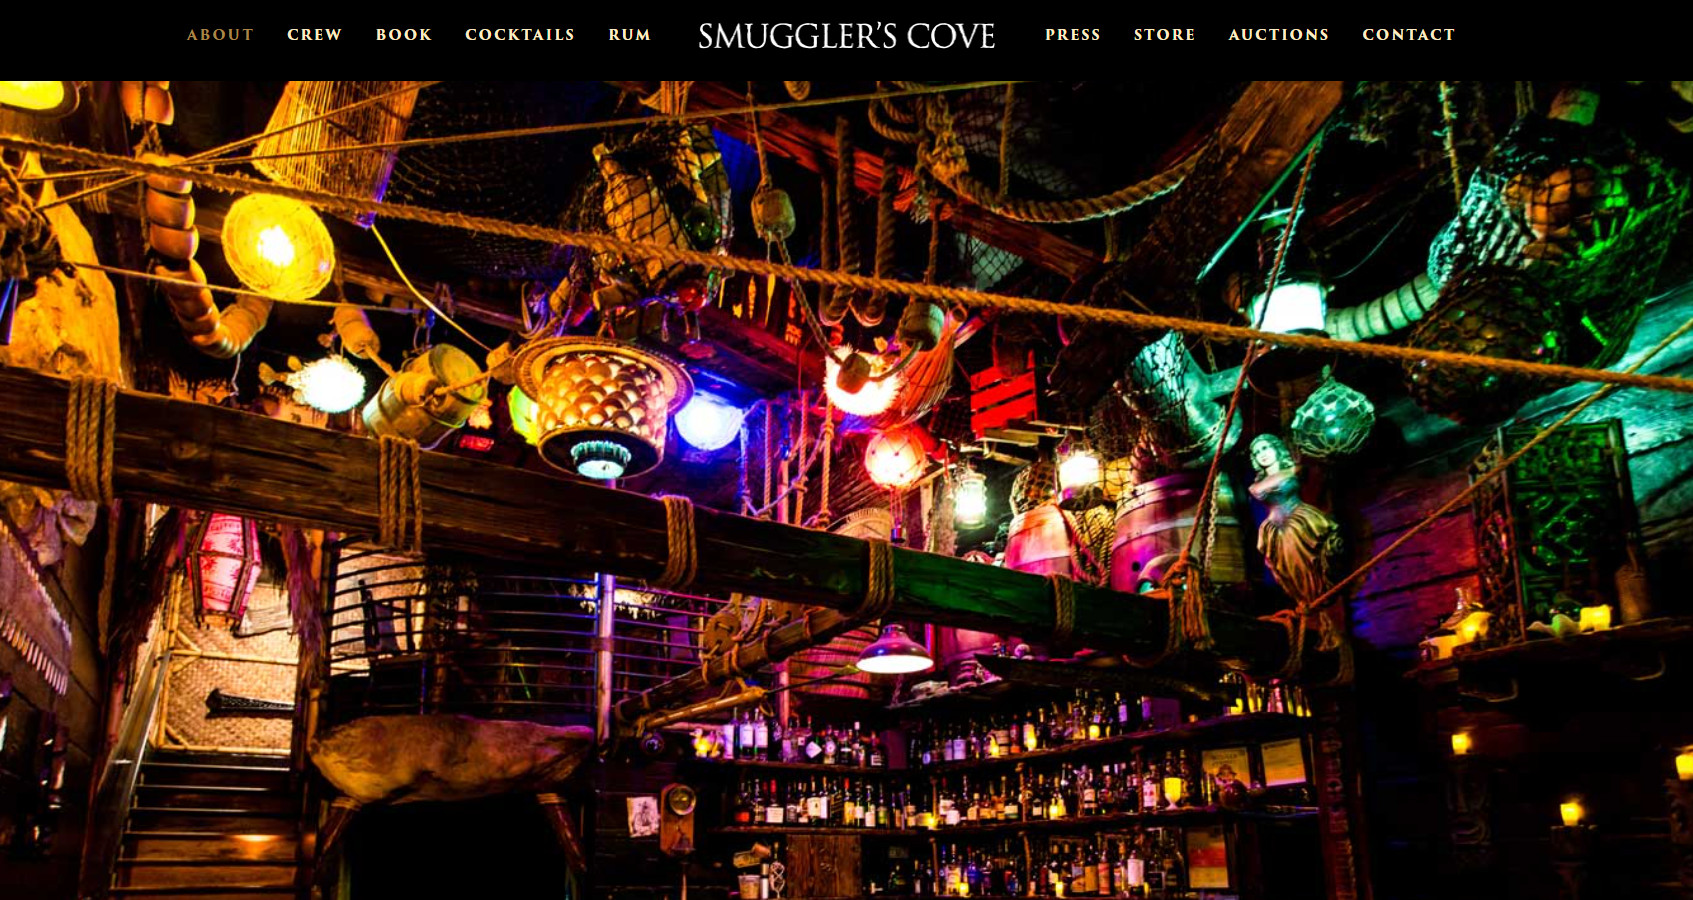 20 best bar websites example: Smuggler's Cove